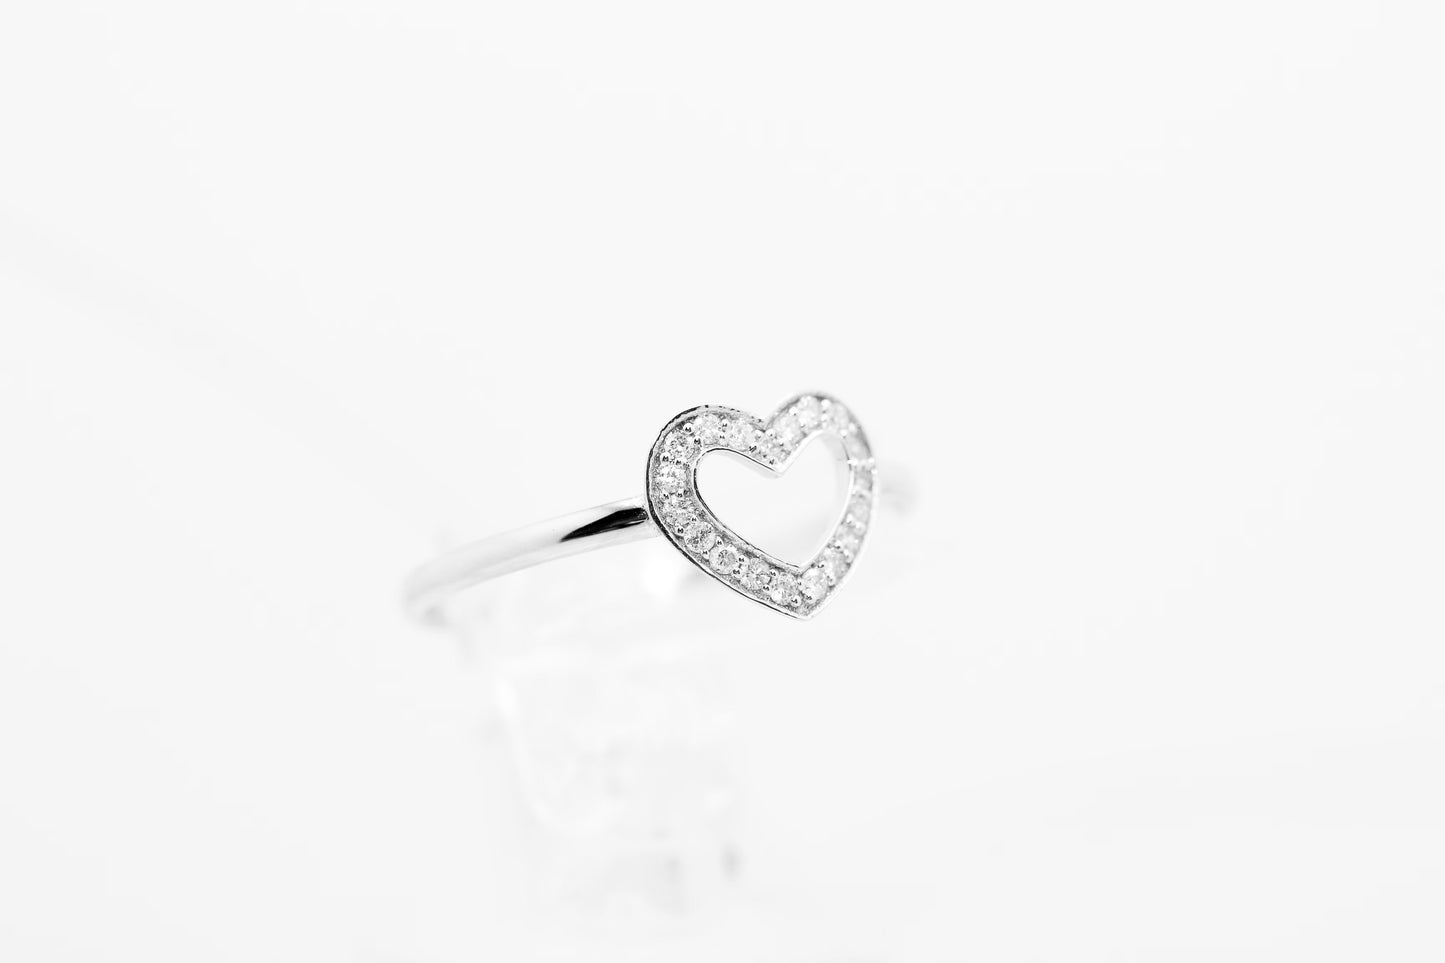 14KW Gold Diamond Heart Ring